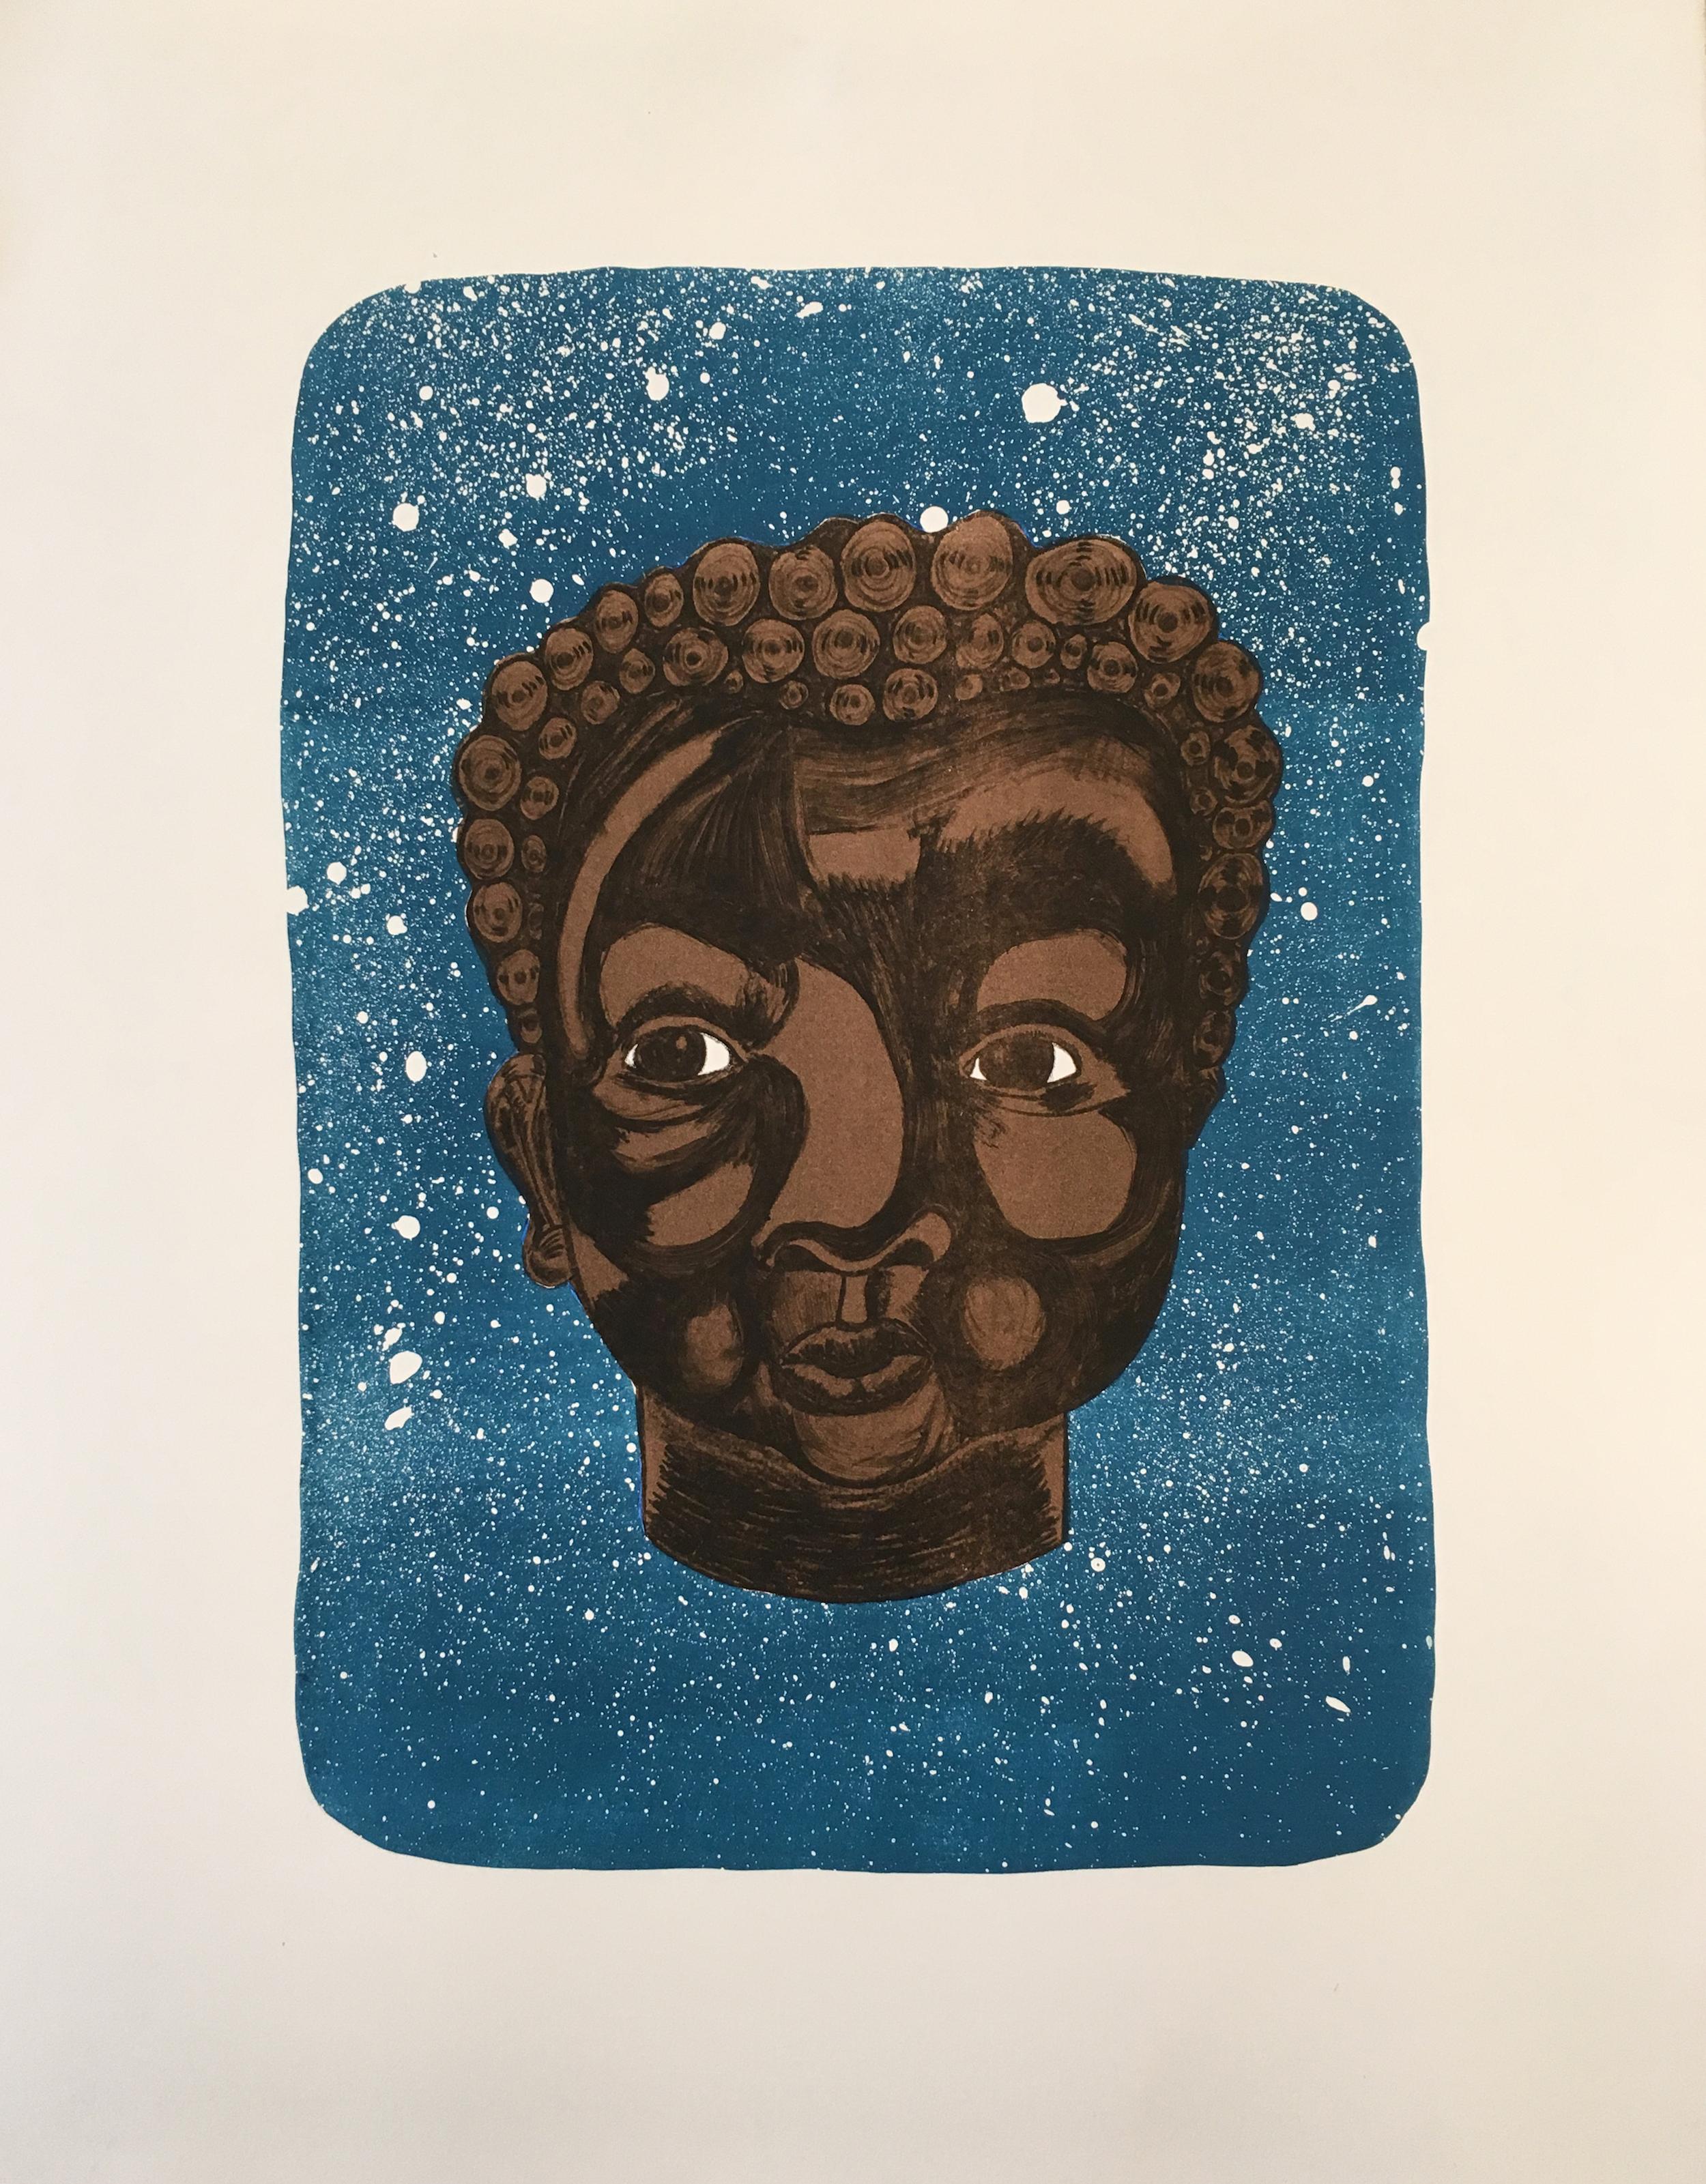 Black Boy Hope I - Print by Jennifer Mack-Watkins